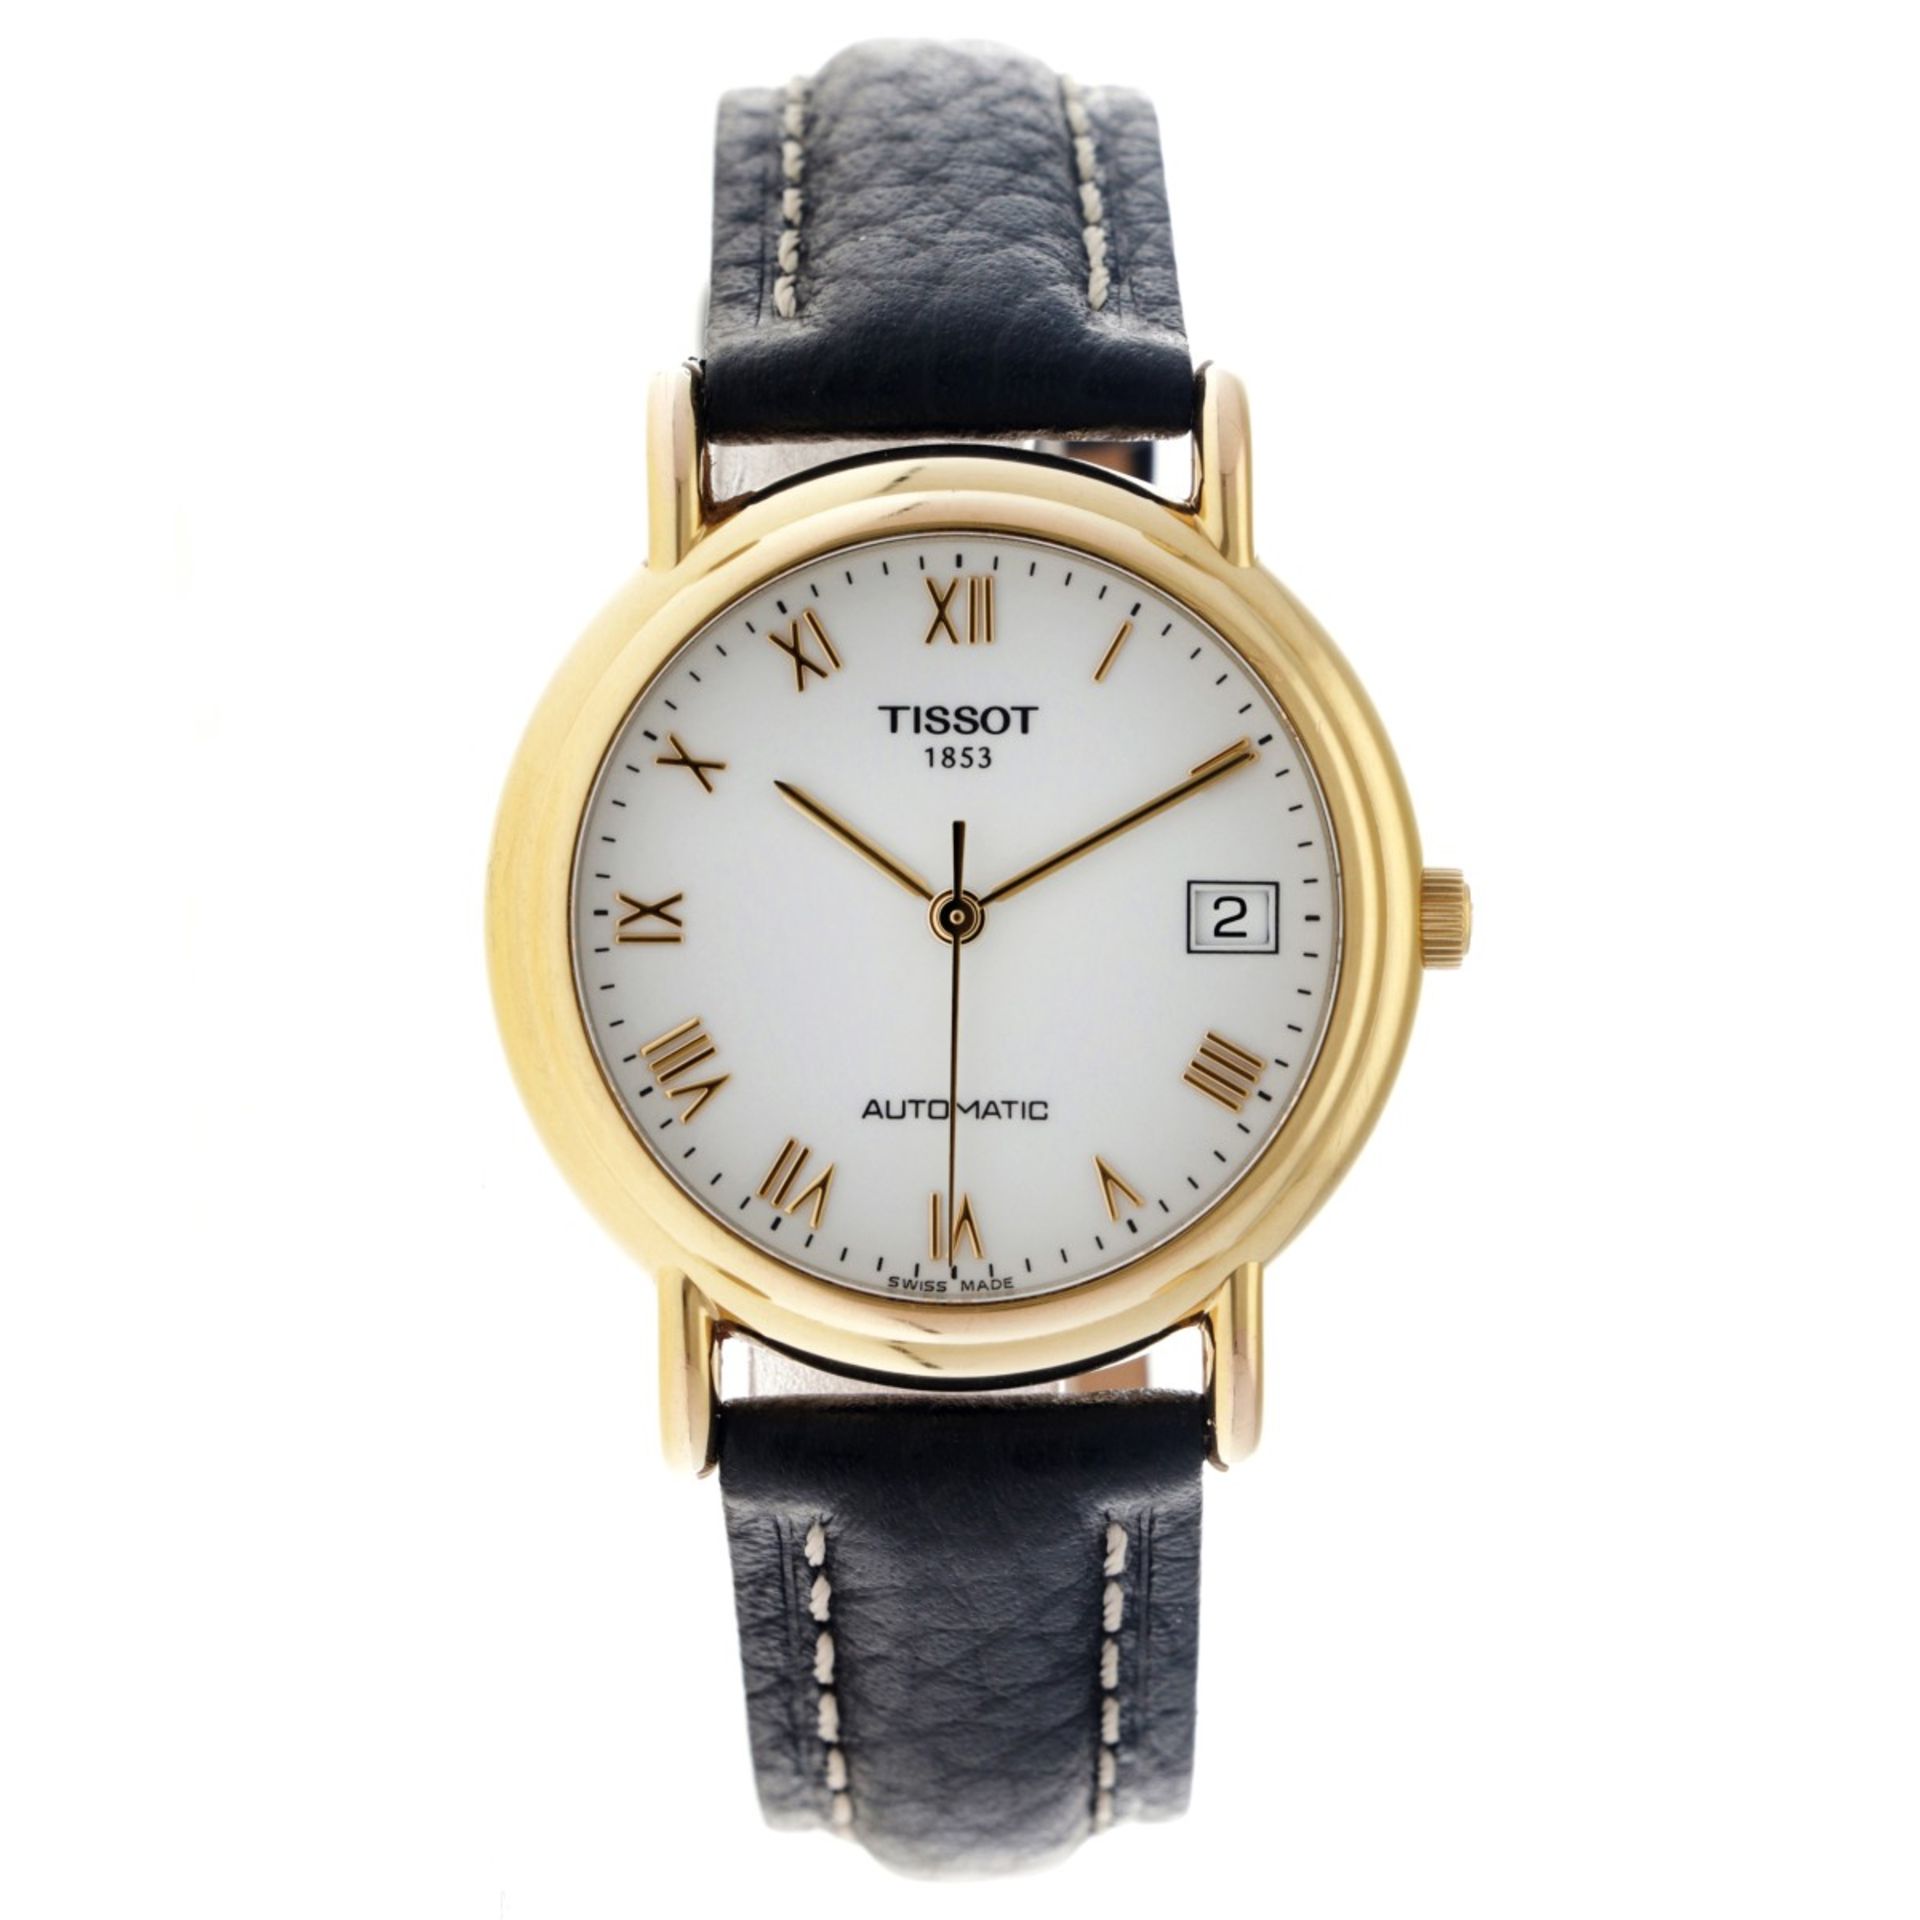 Tissot T-Gold T71.3.444.13 - Men's watch - 2011.